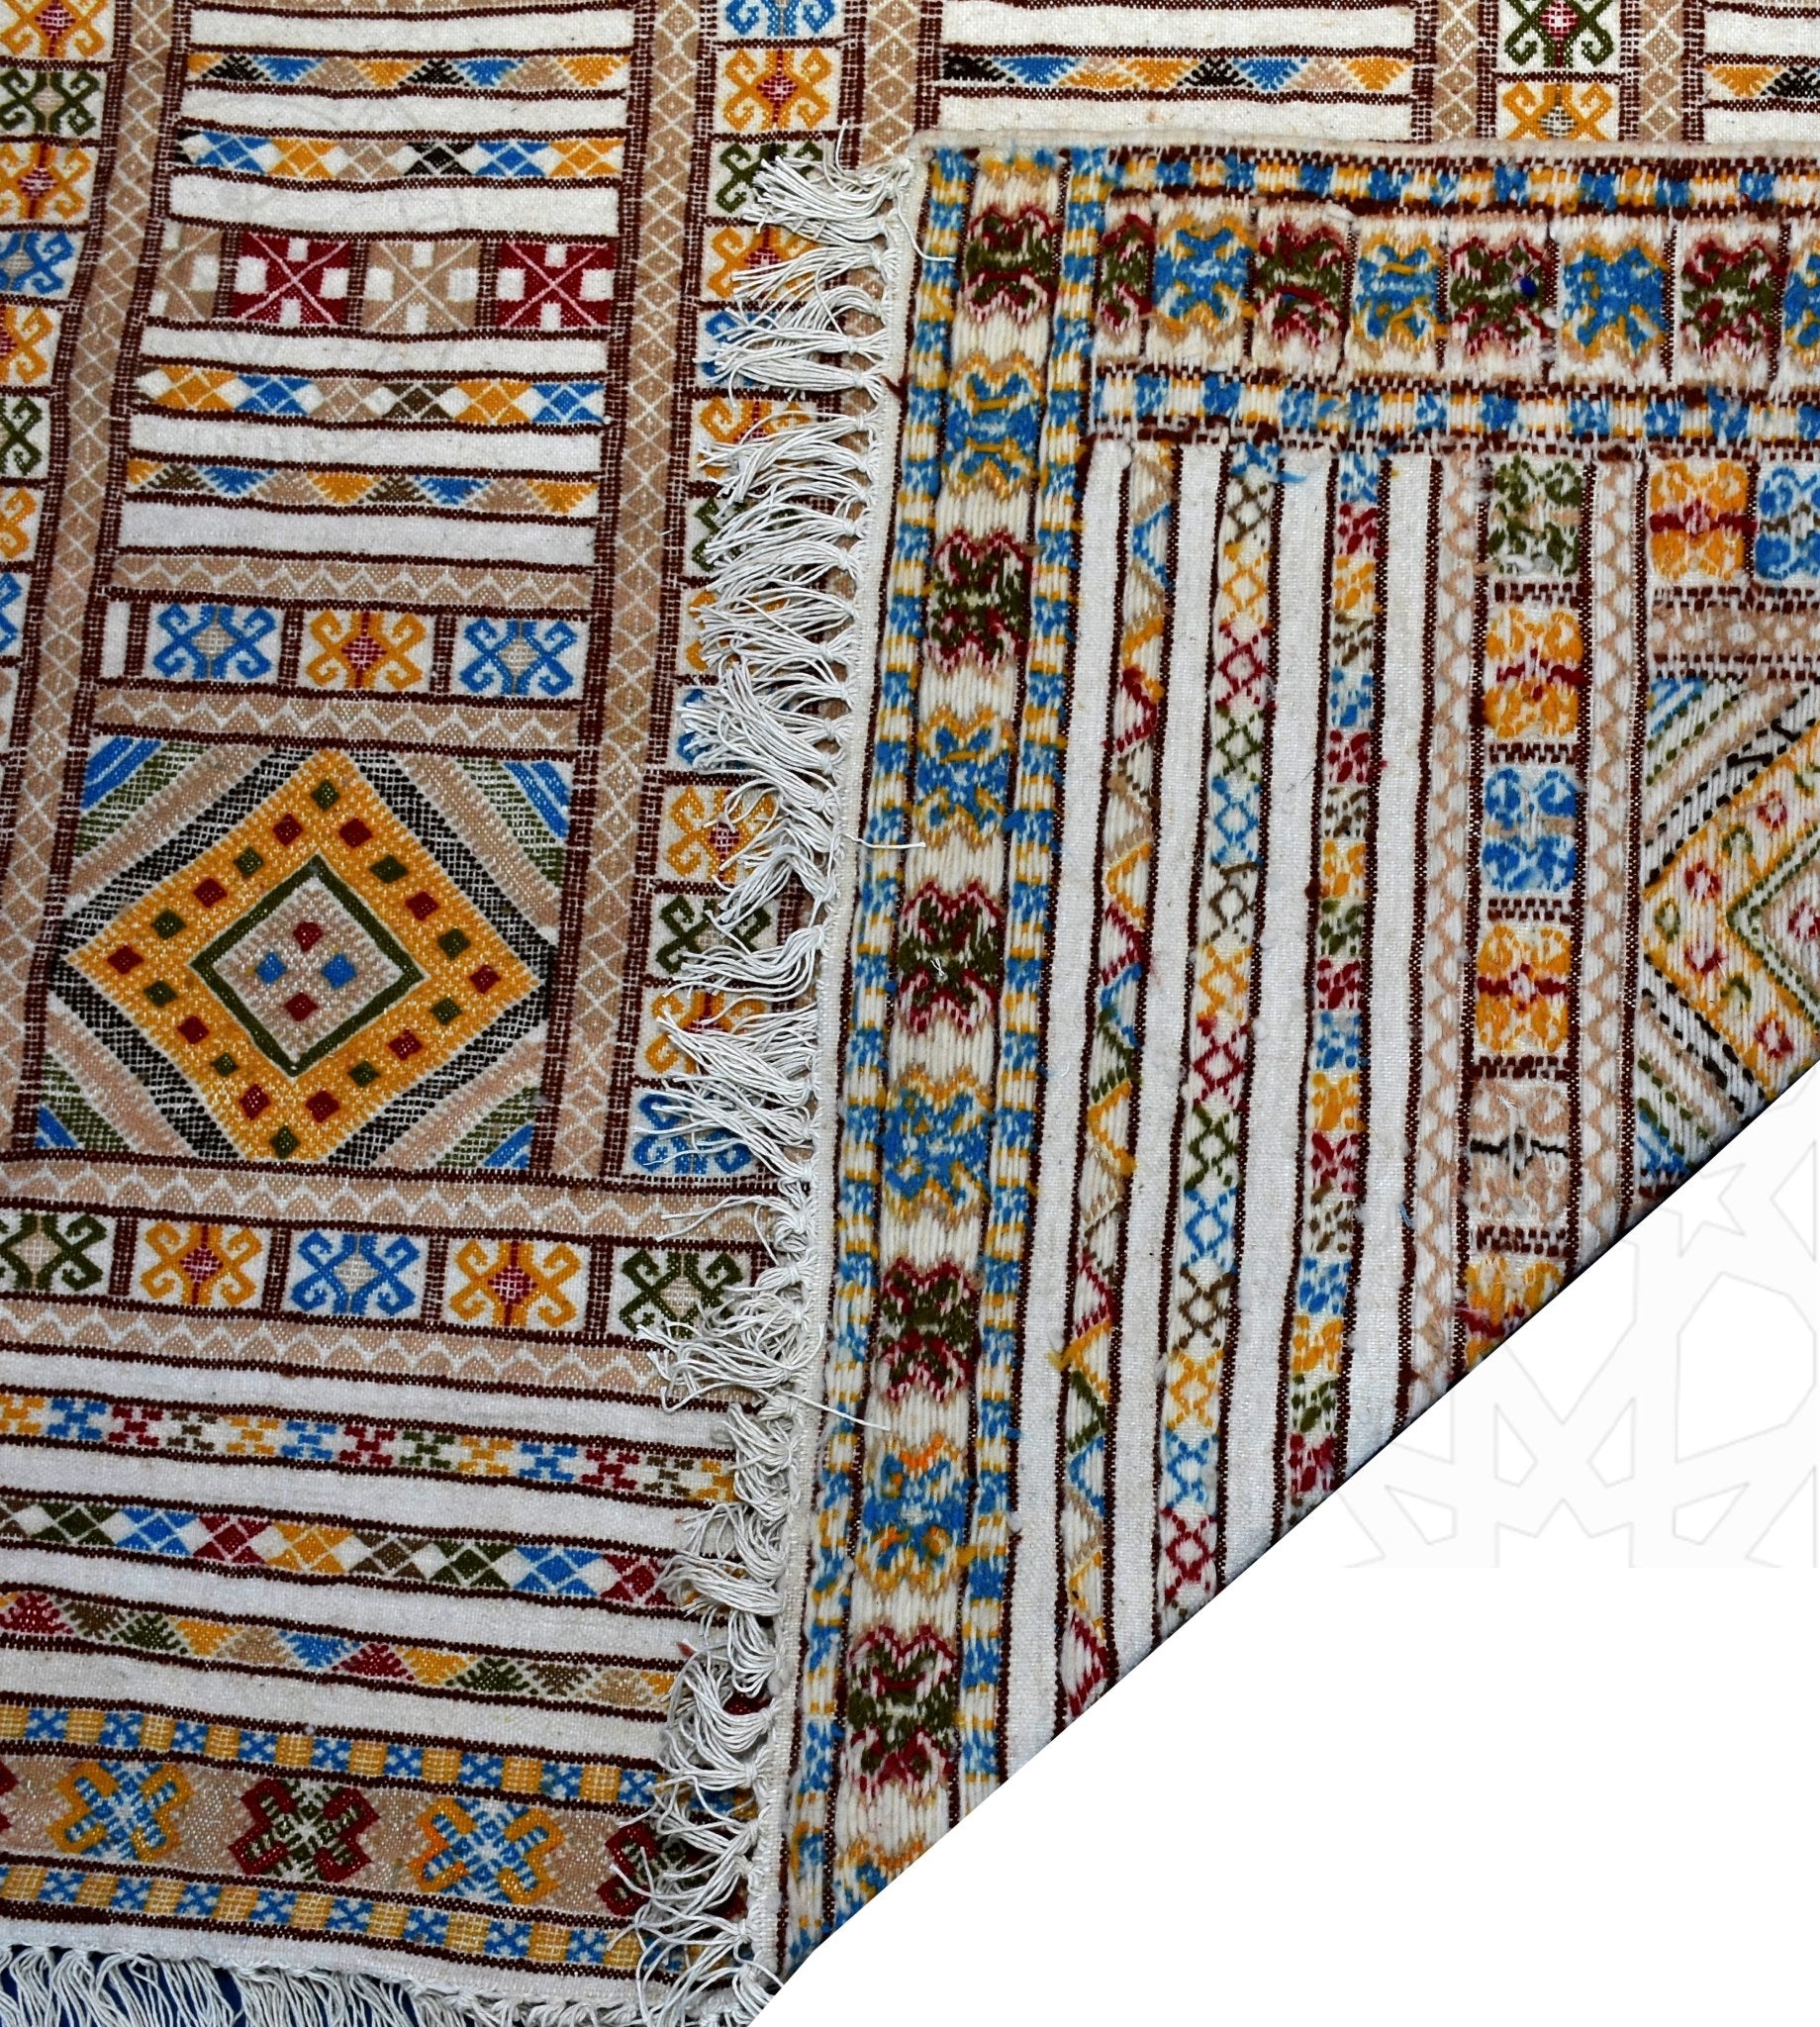 Flatweave kilim hanbal Moroccan rug - 4.93 x 7.22 ft / 150 x 220 cm - Berbers Market